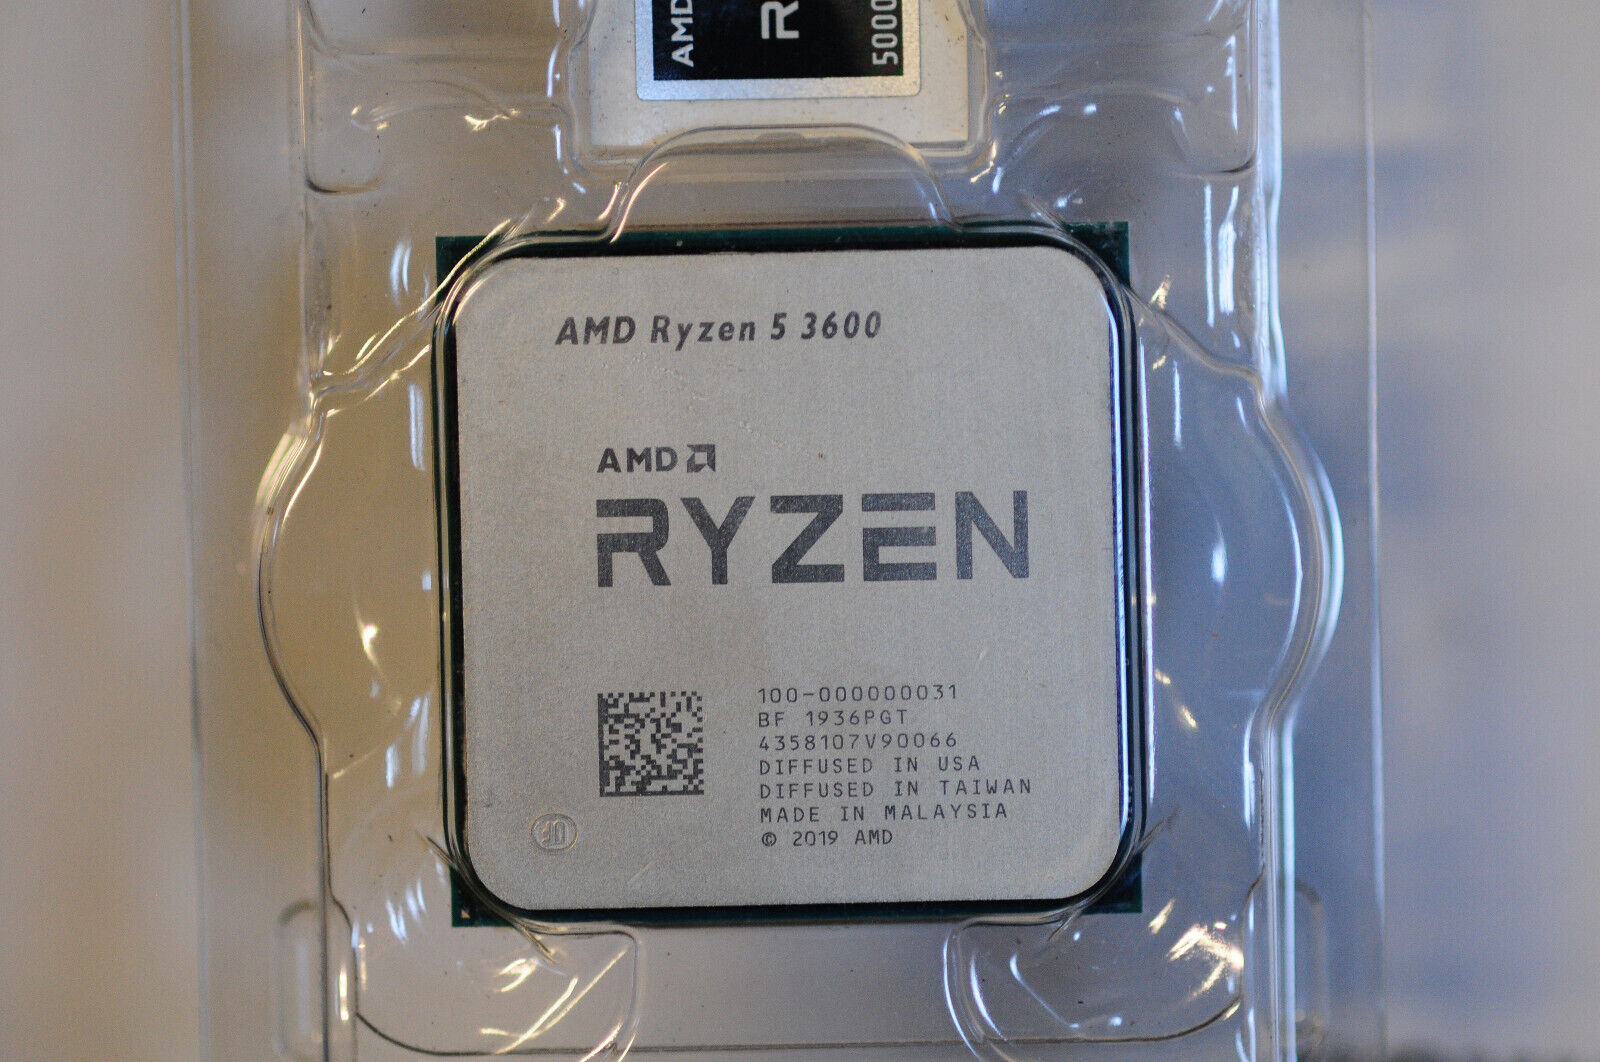 AMD Ryzen 5 3600 Processor 6 Core 12 thread AM4 CPU good condition working